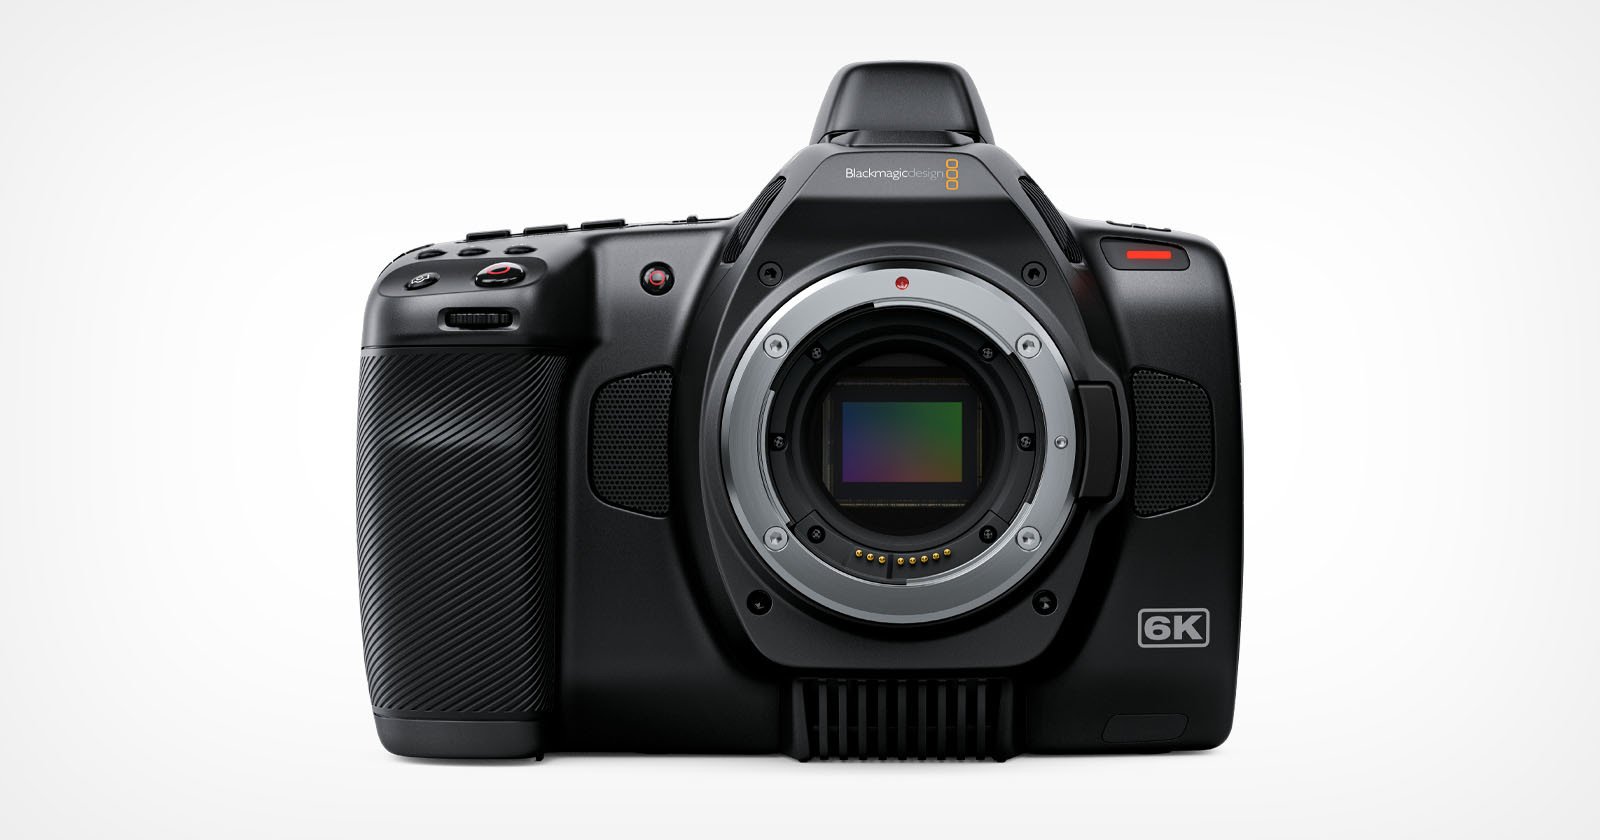  blackmagic adds modestly updated 995 pocket cinema camera 